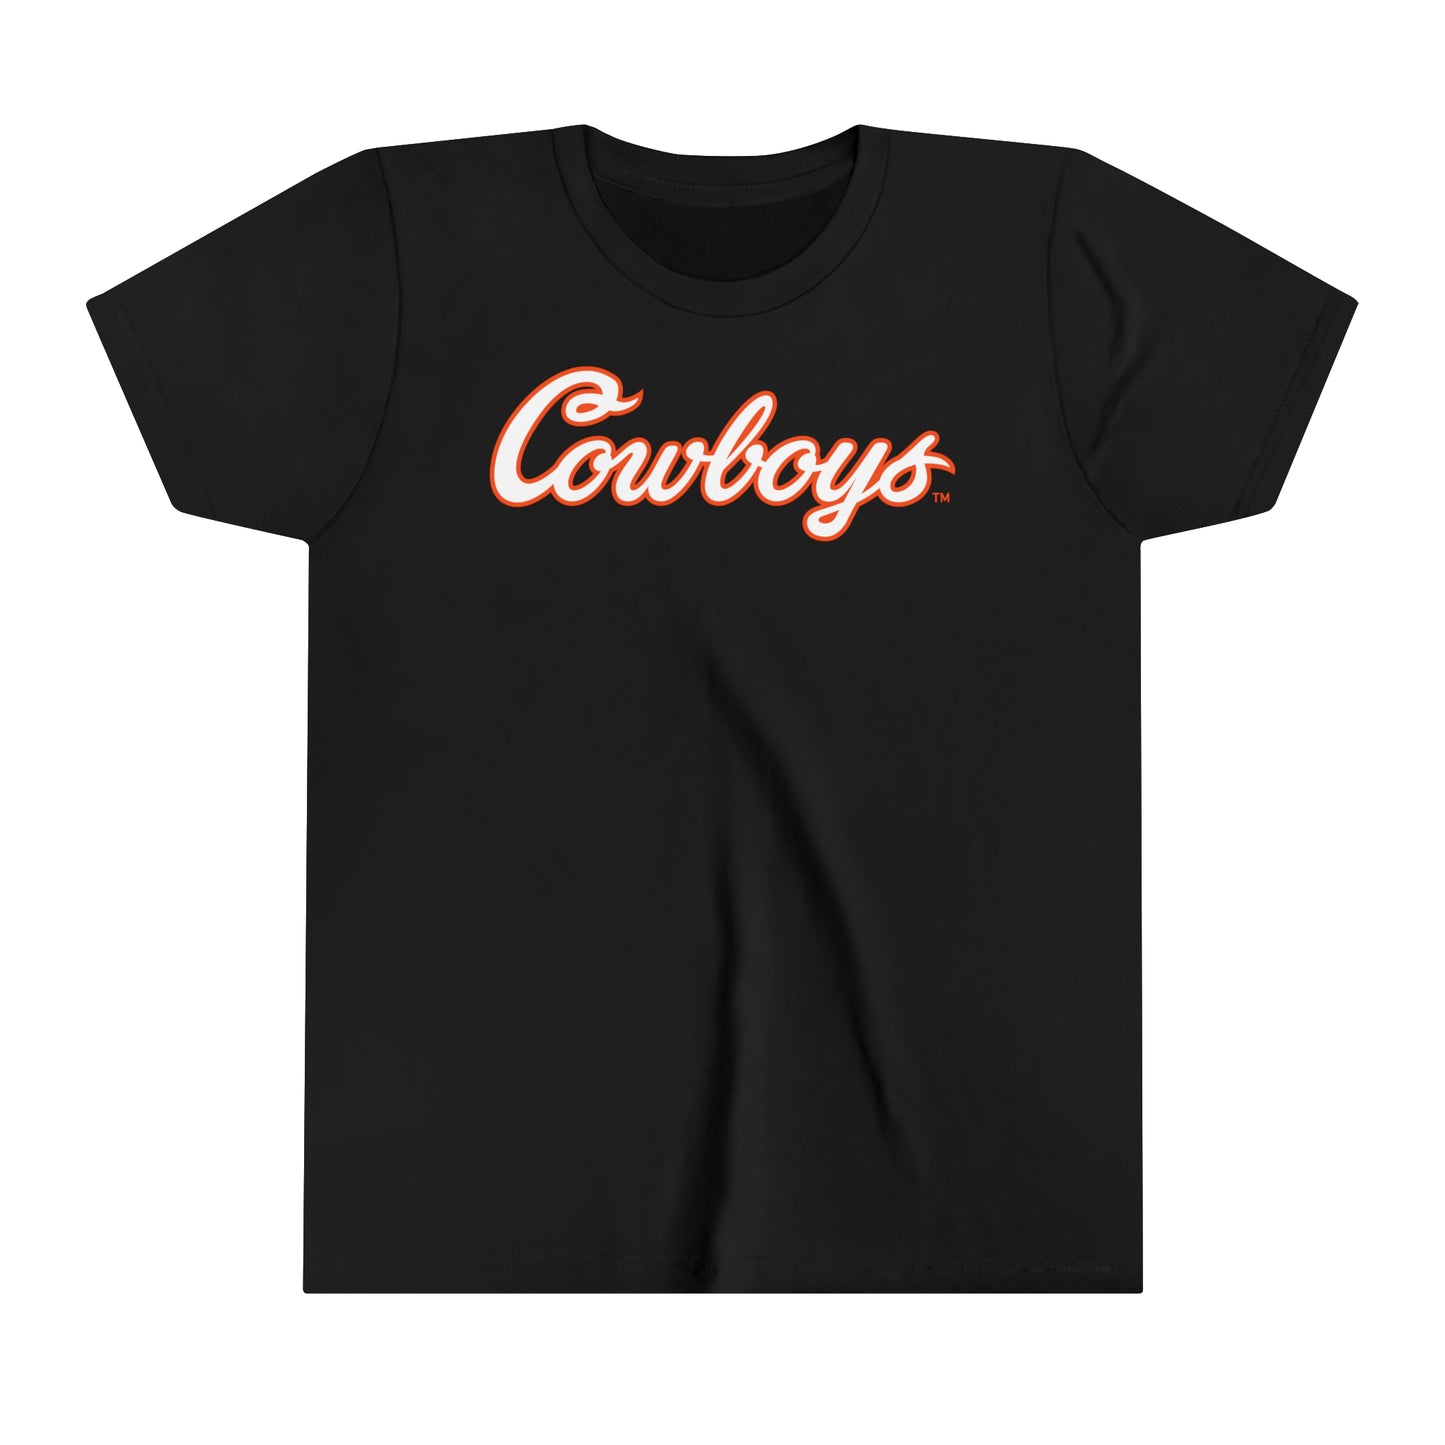 Collin Clay #93 Cursive Cowboys Youth T-Shirt